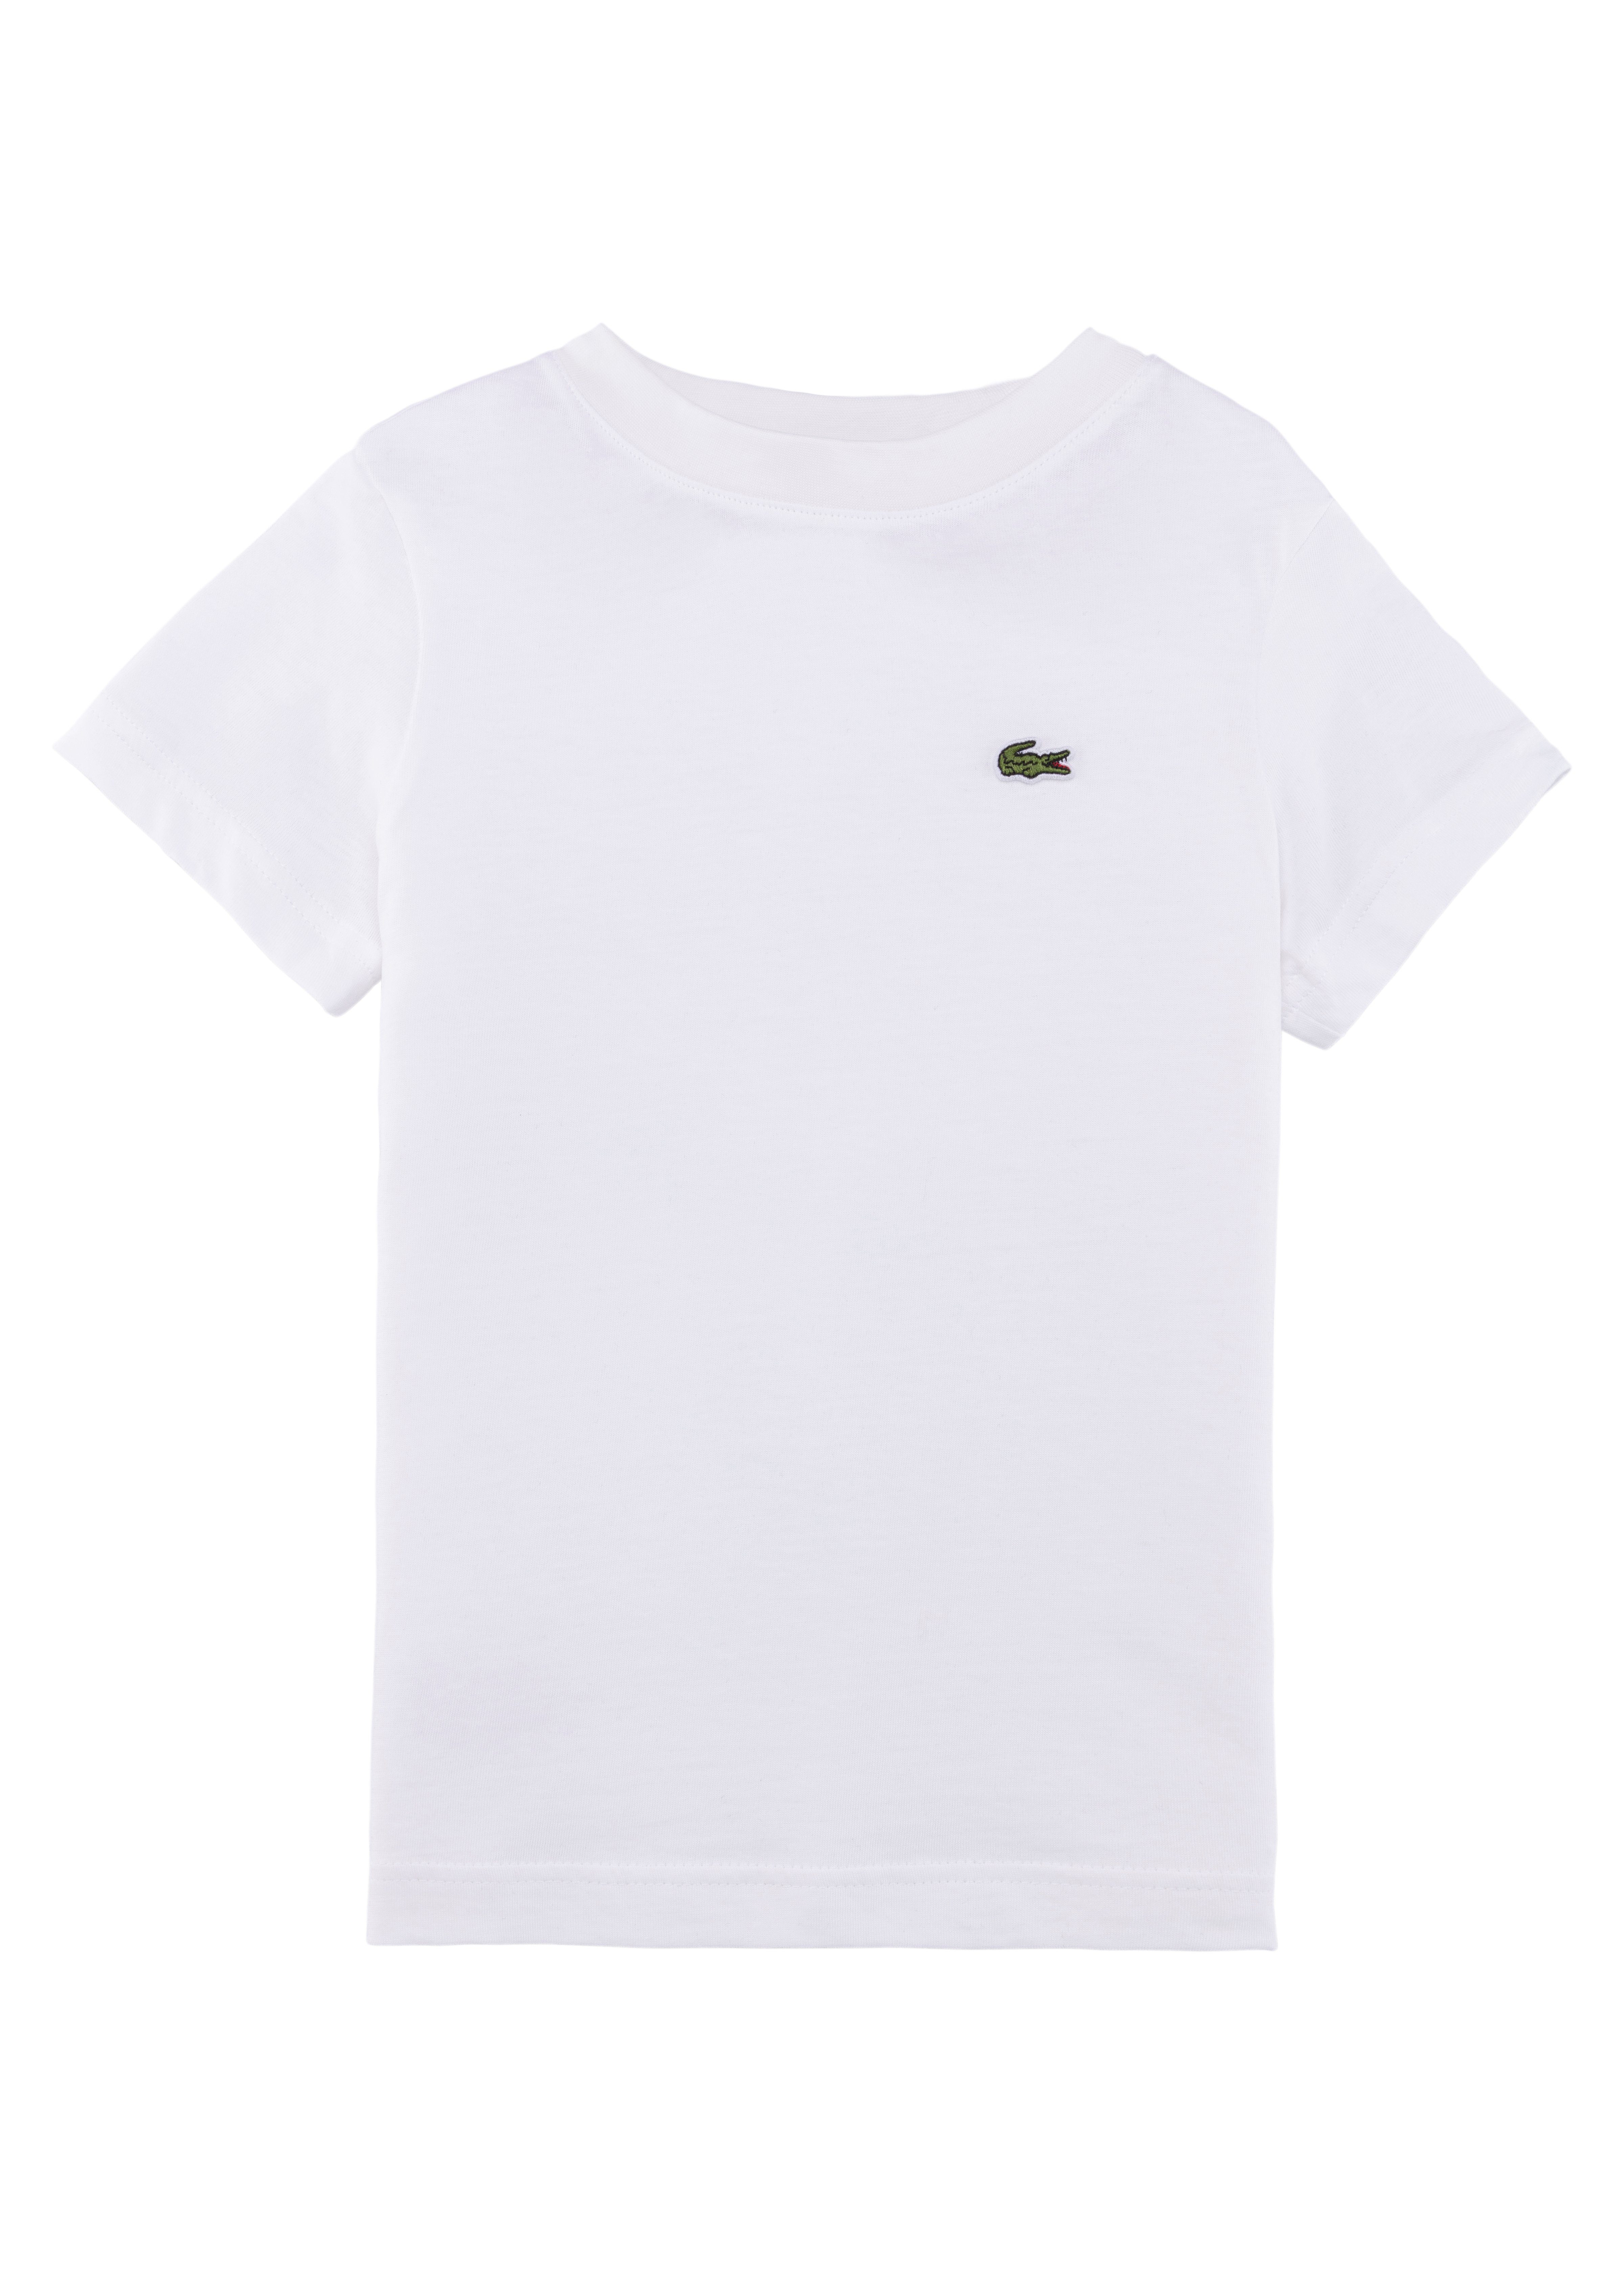 Lacoste-Krokodil auf Lacoste Brusthöhe mit WHITE T-Shirt